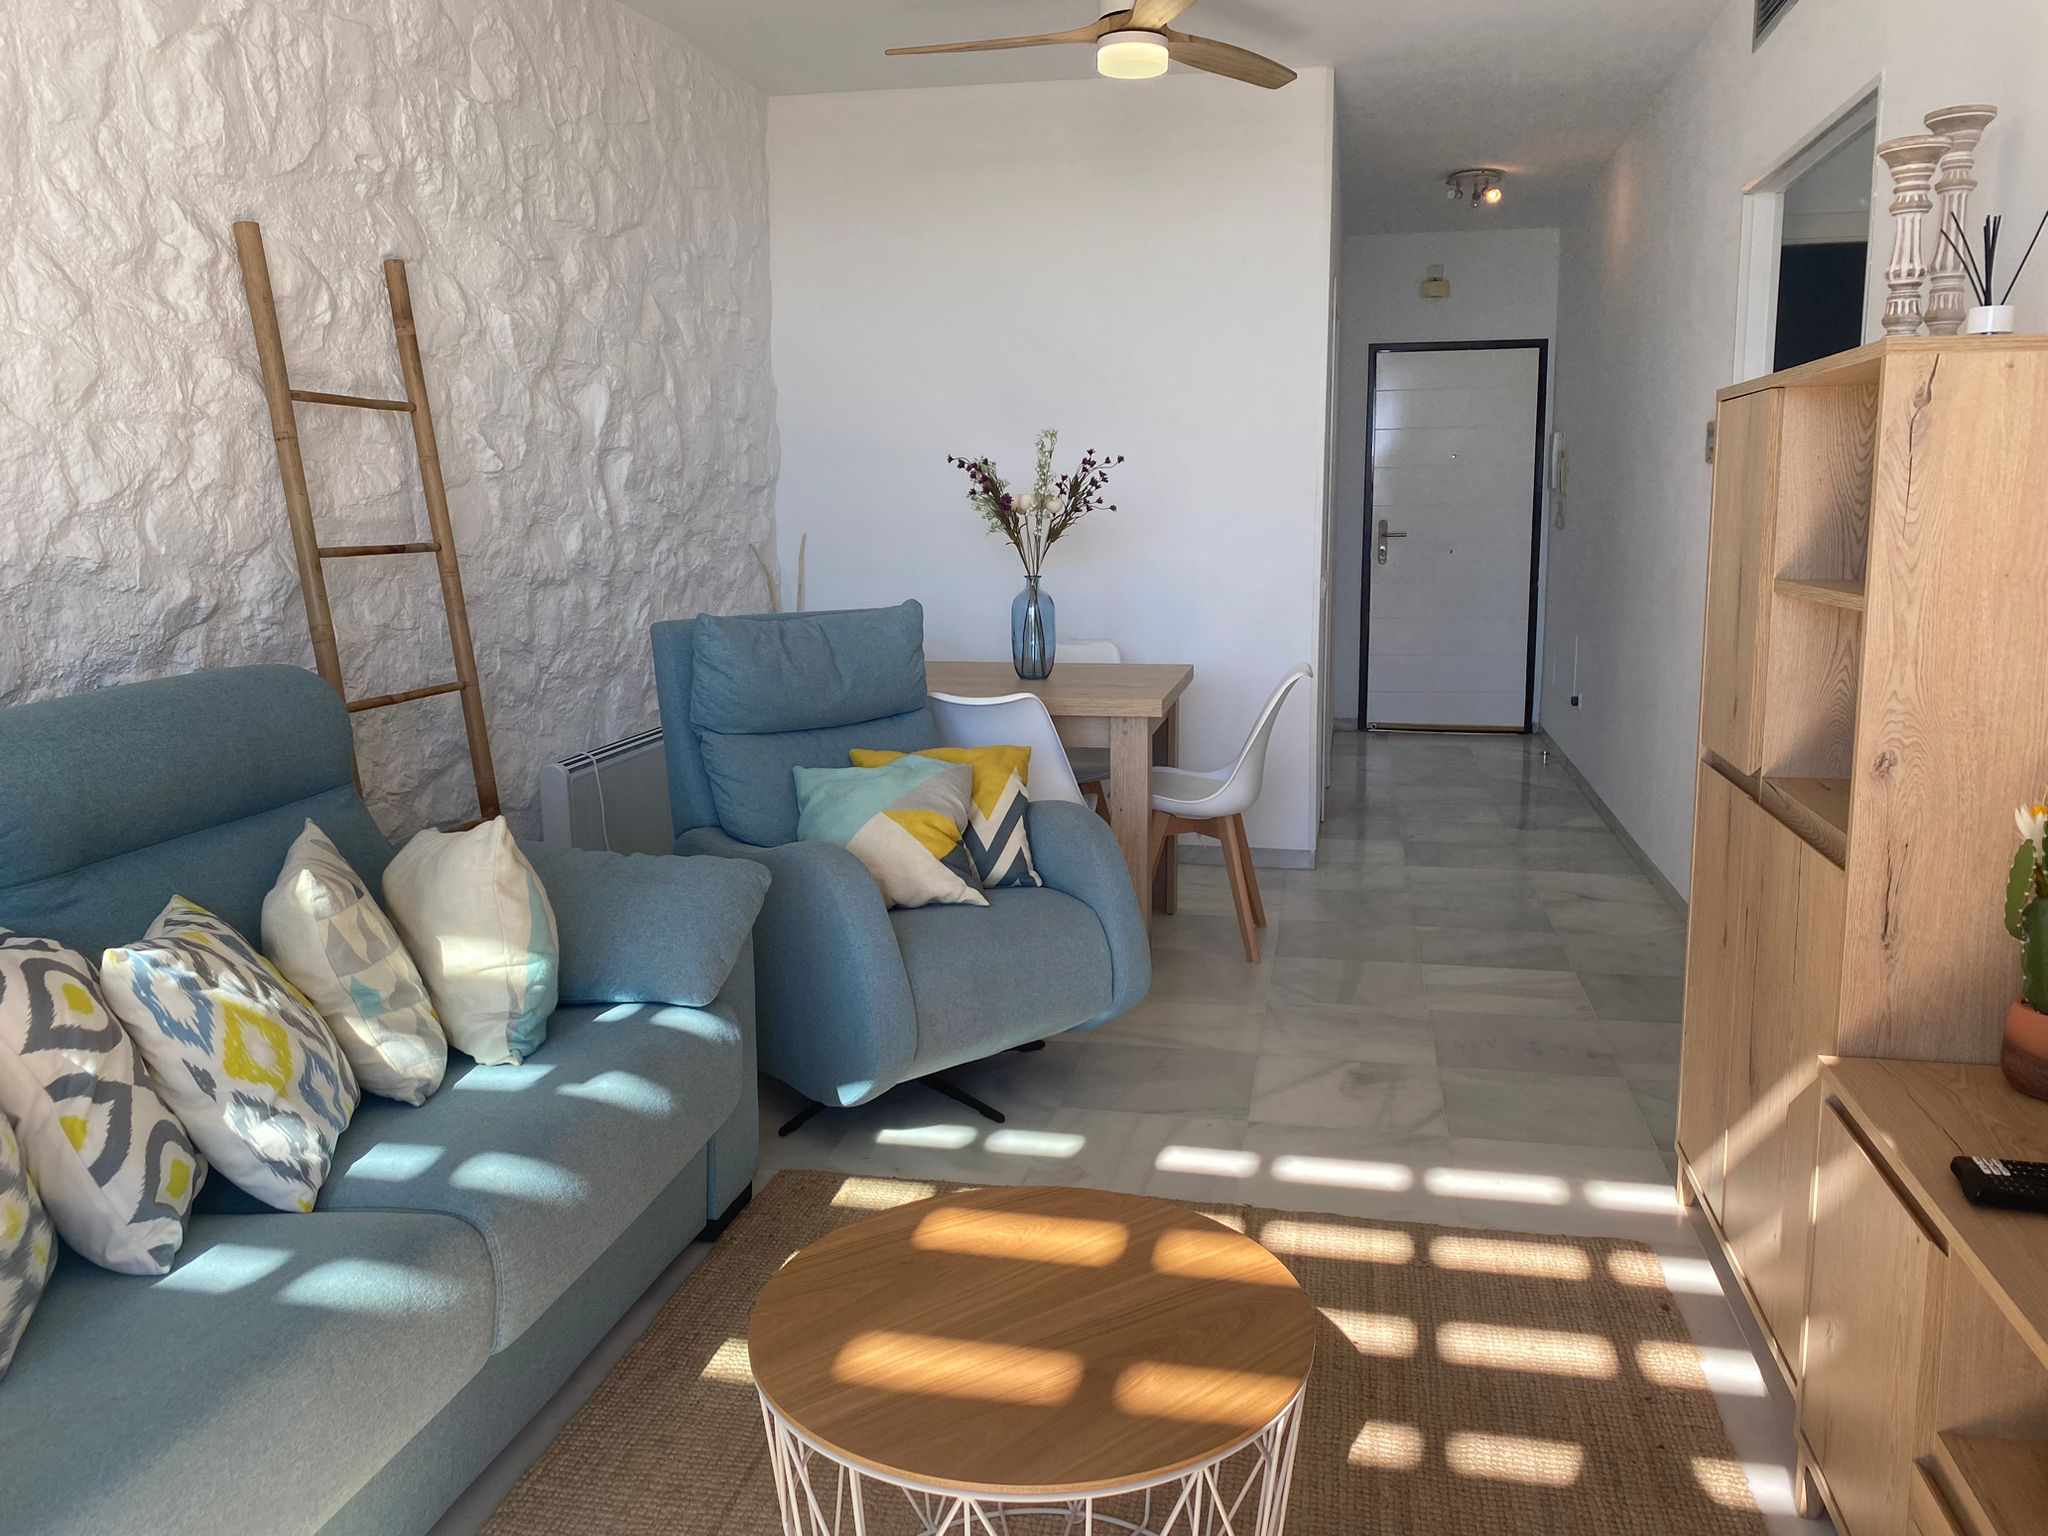 Bello apartamento ideal para familias : Apartamento en alquiler en Mojácar, Almería